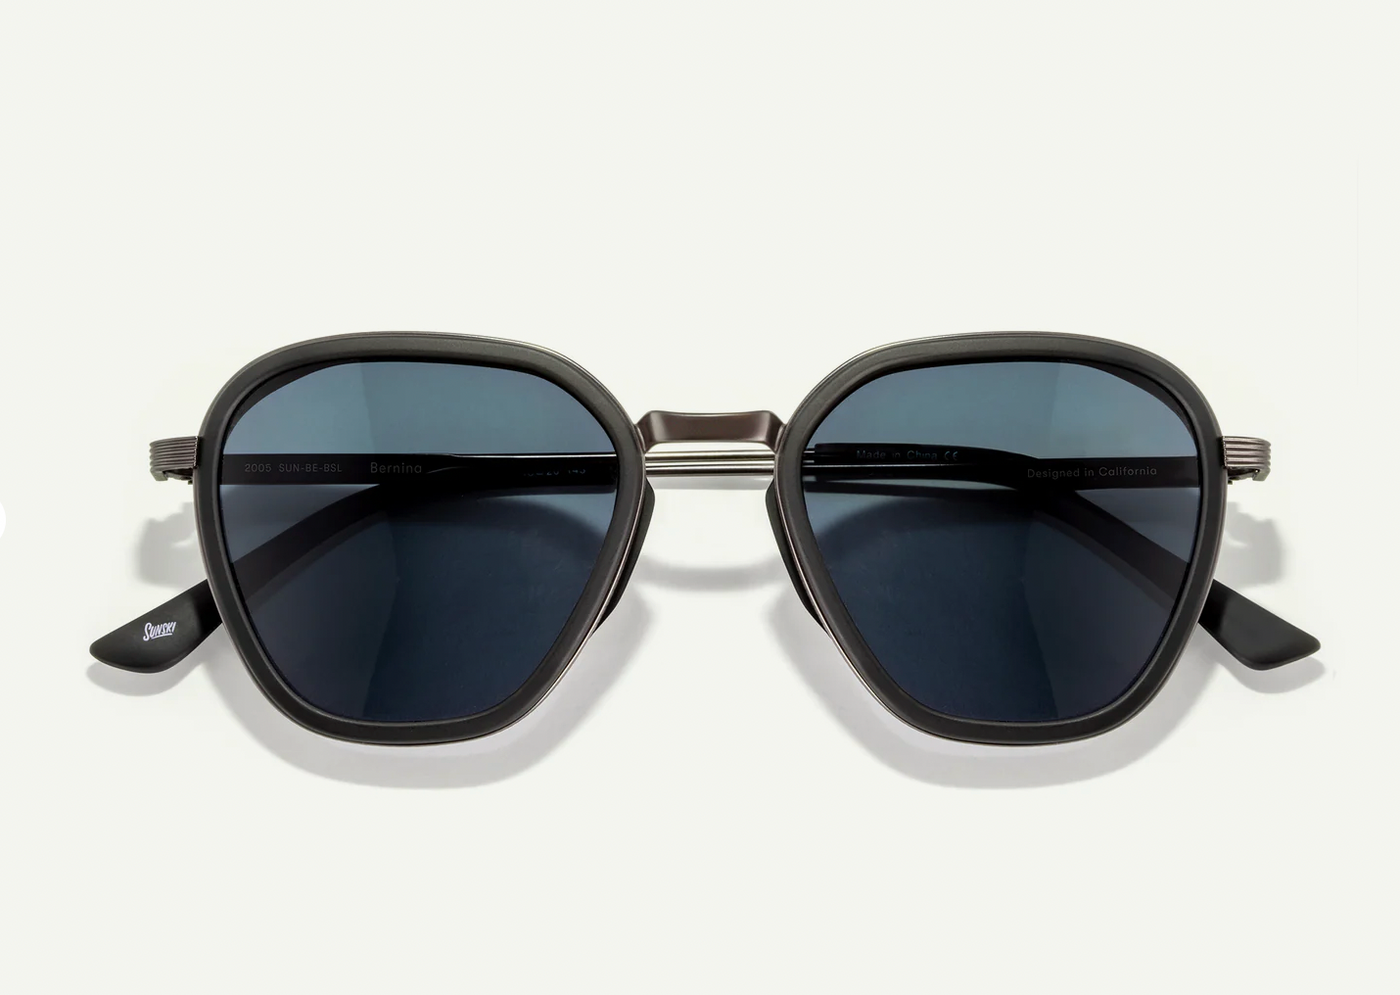 Bernina Sunglasses